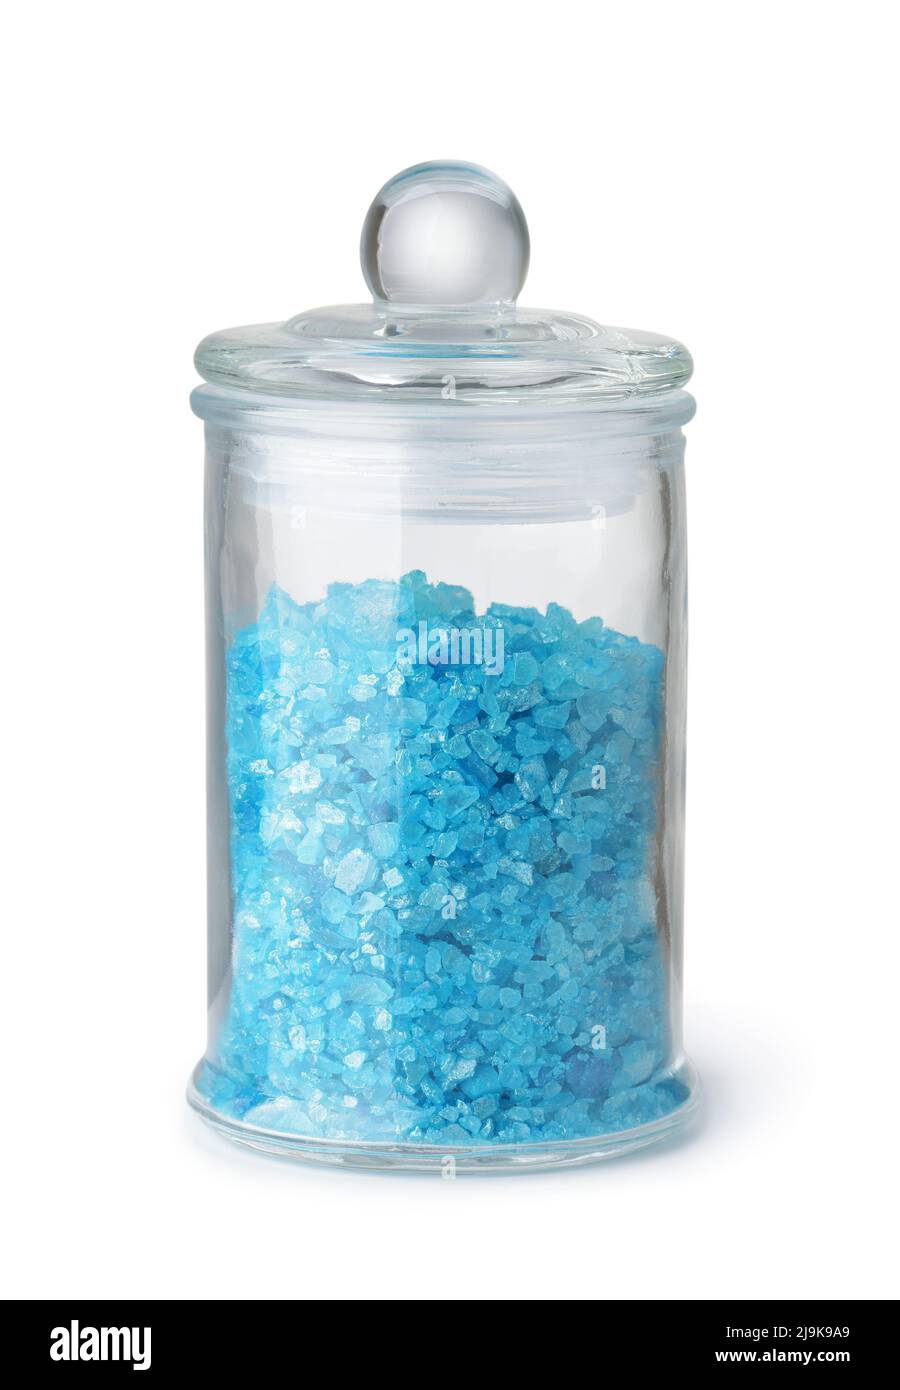 Vintage glass jar of blue aromatic bath salt isolated on white Stock Photo